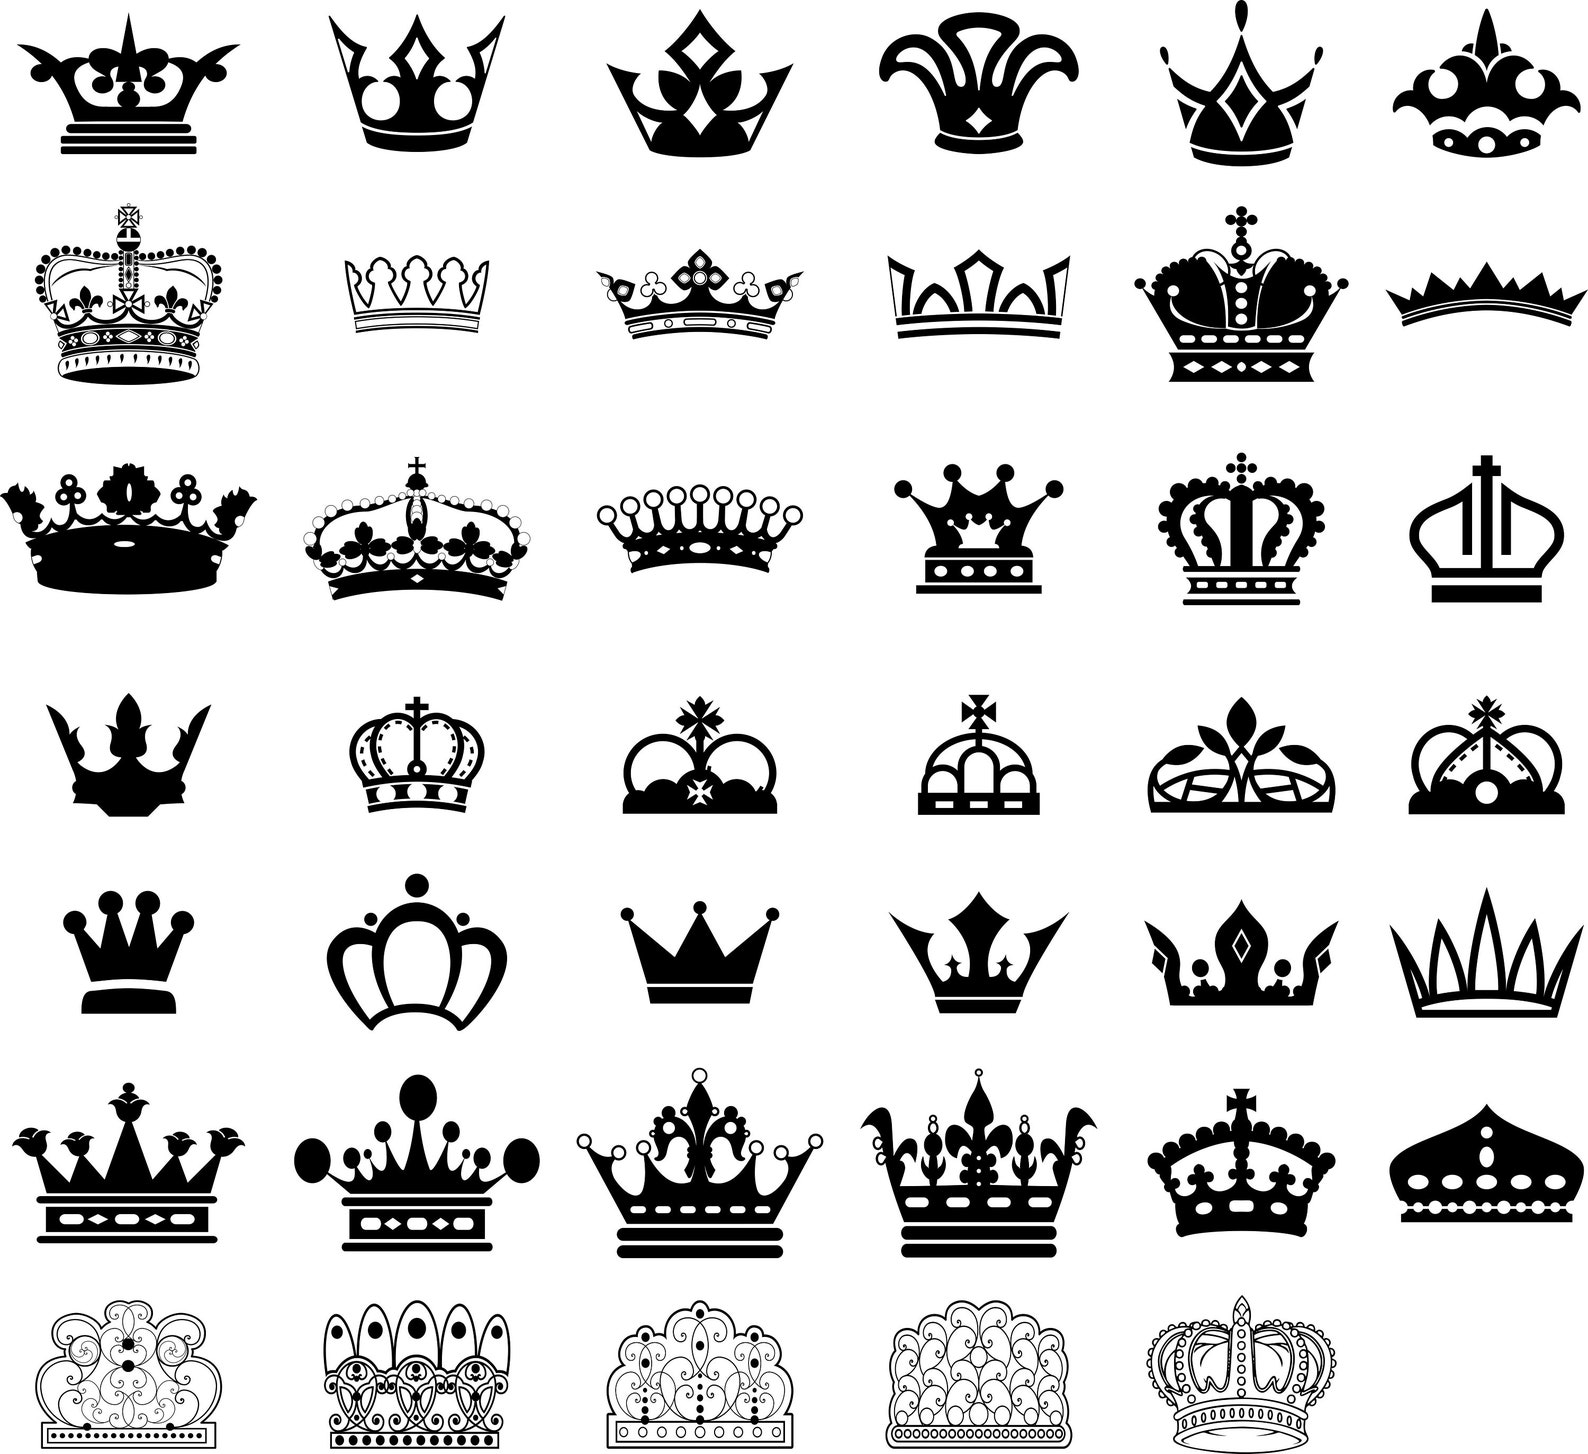 Festive black crowns.